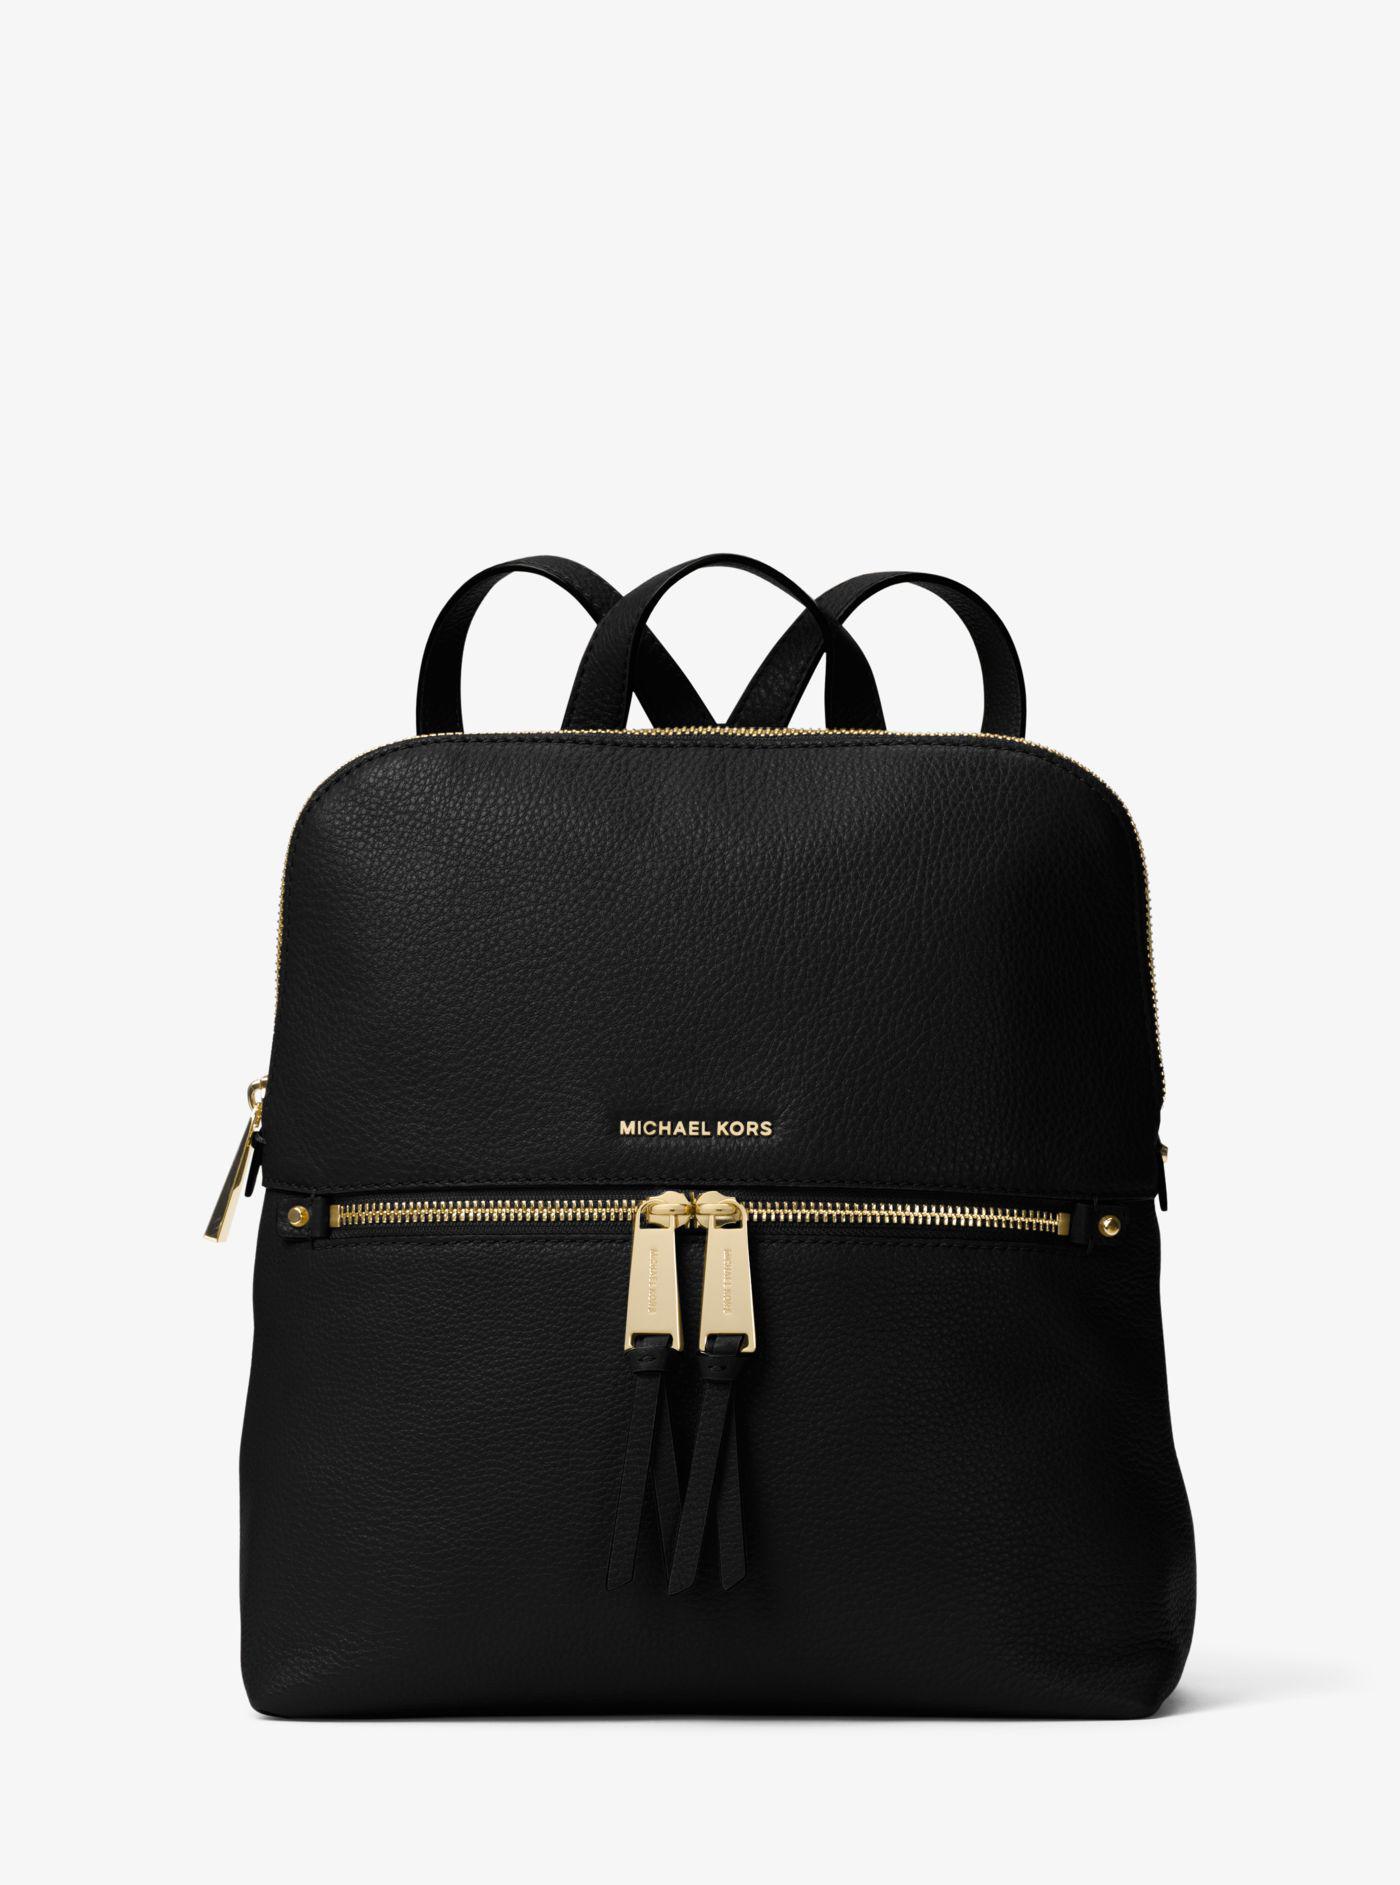 Michael Kors Rhea Medium Slim Leather Backpack in Black - Lyst